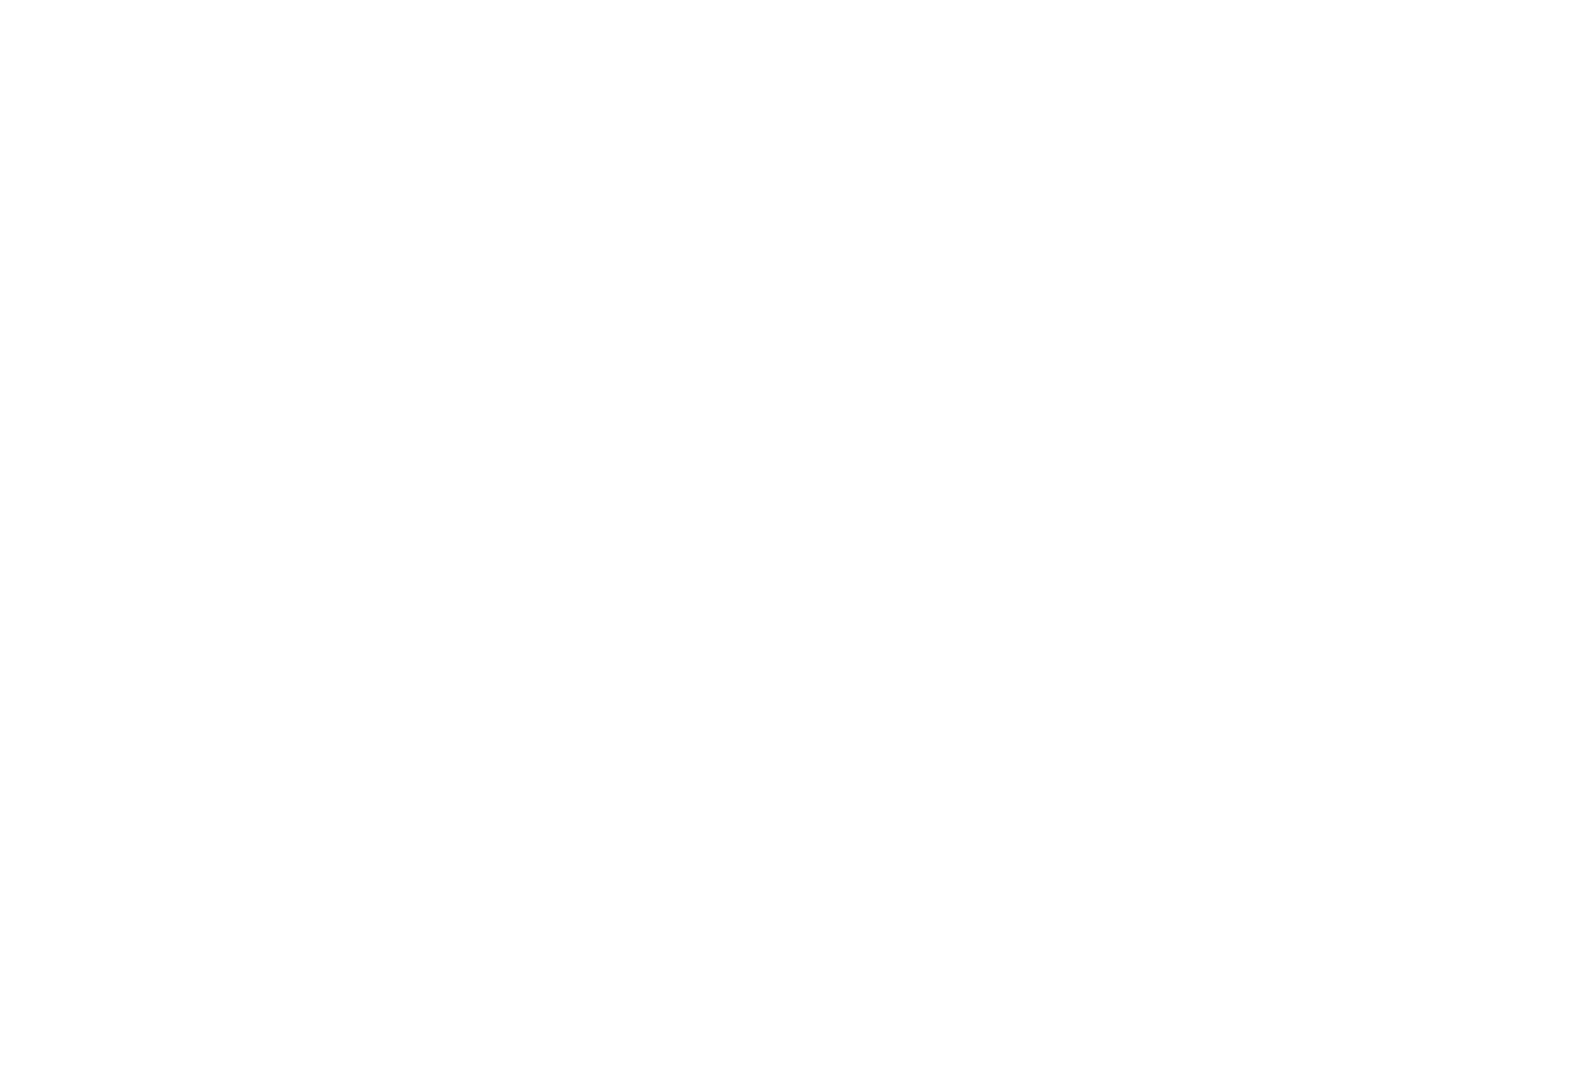 Gogoro logo pour fonds sombres (PNG transparent)